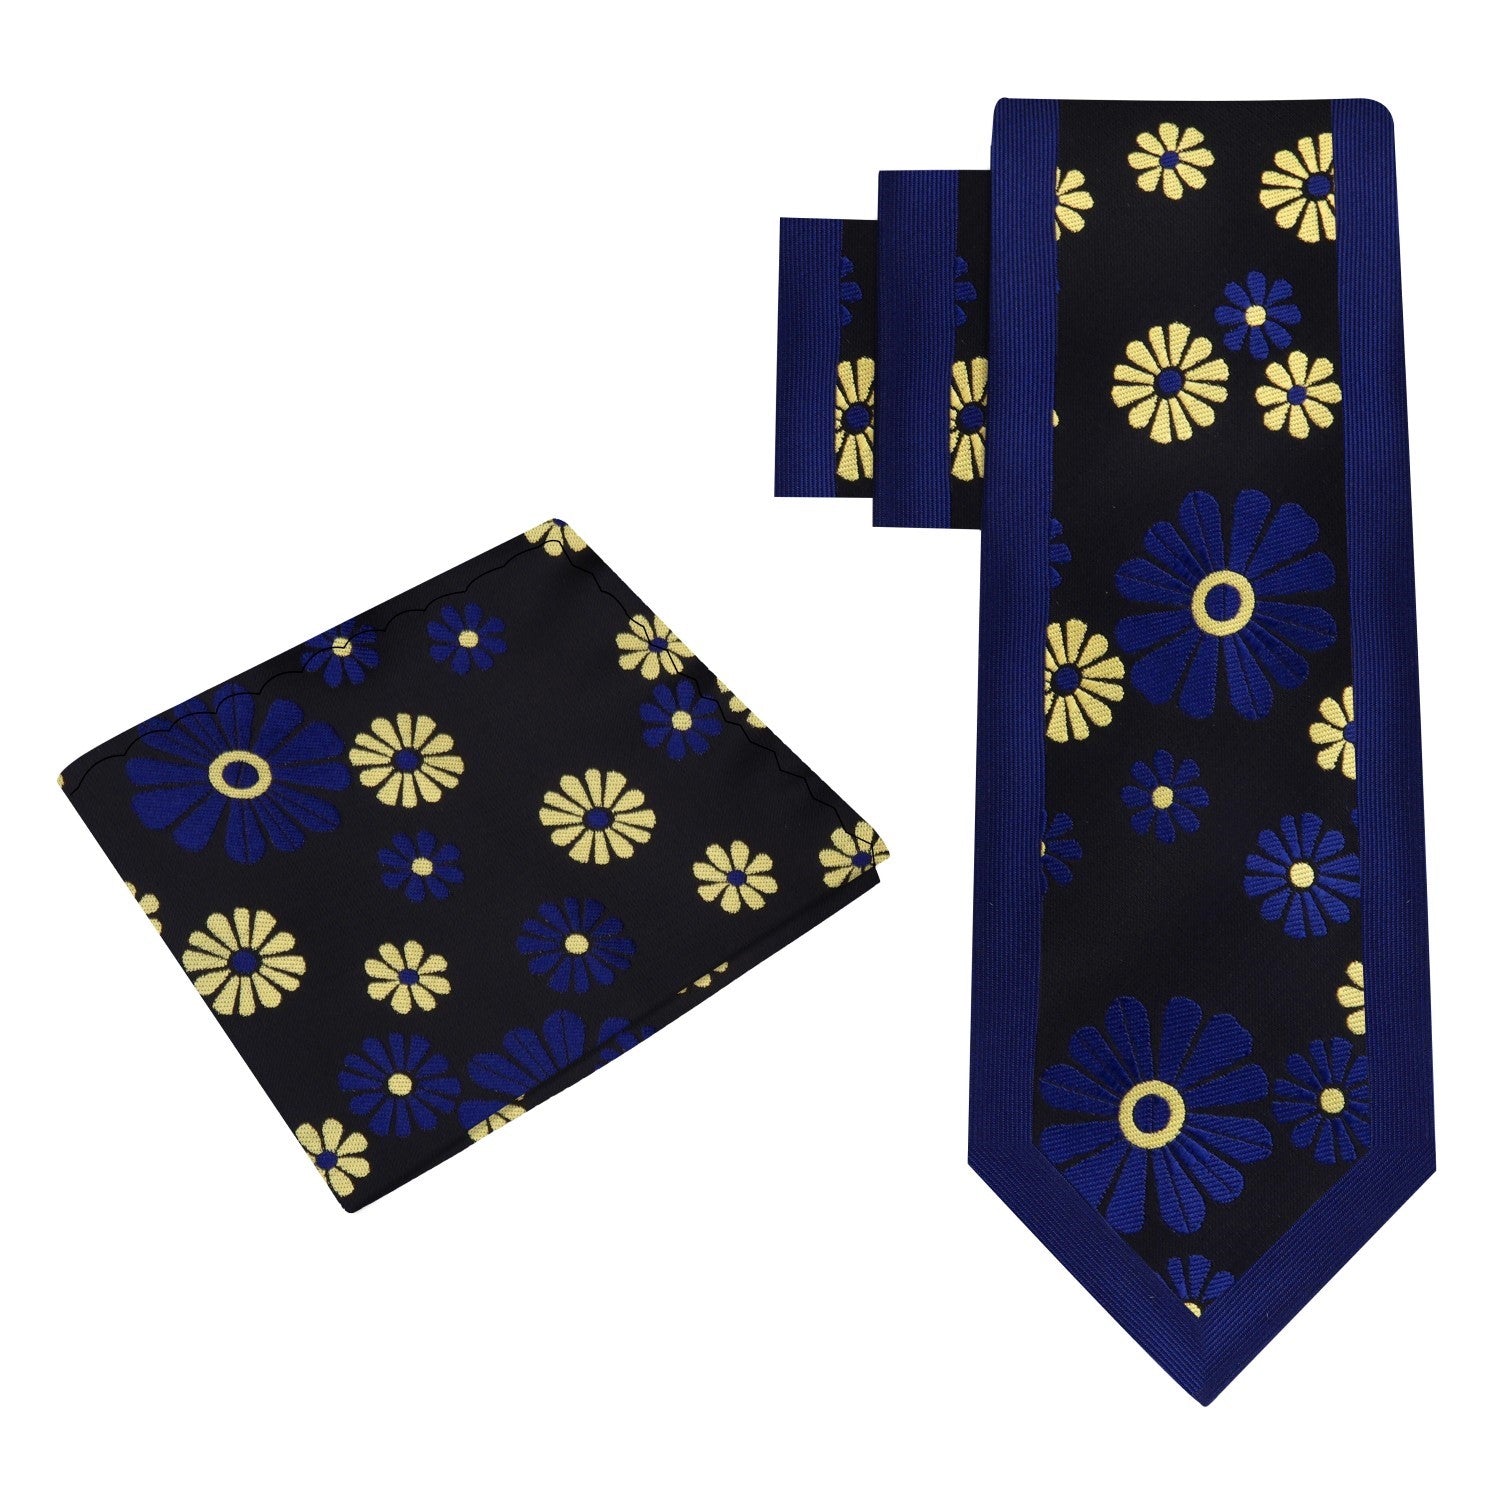 Alt View; Dark Blue, Black and Yellow Cactus Flower Tie